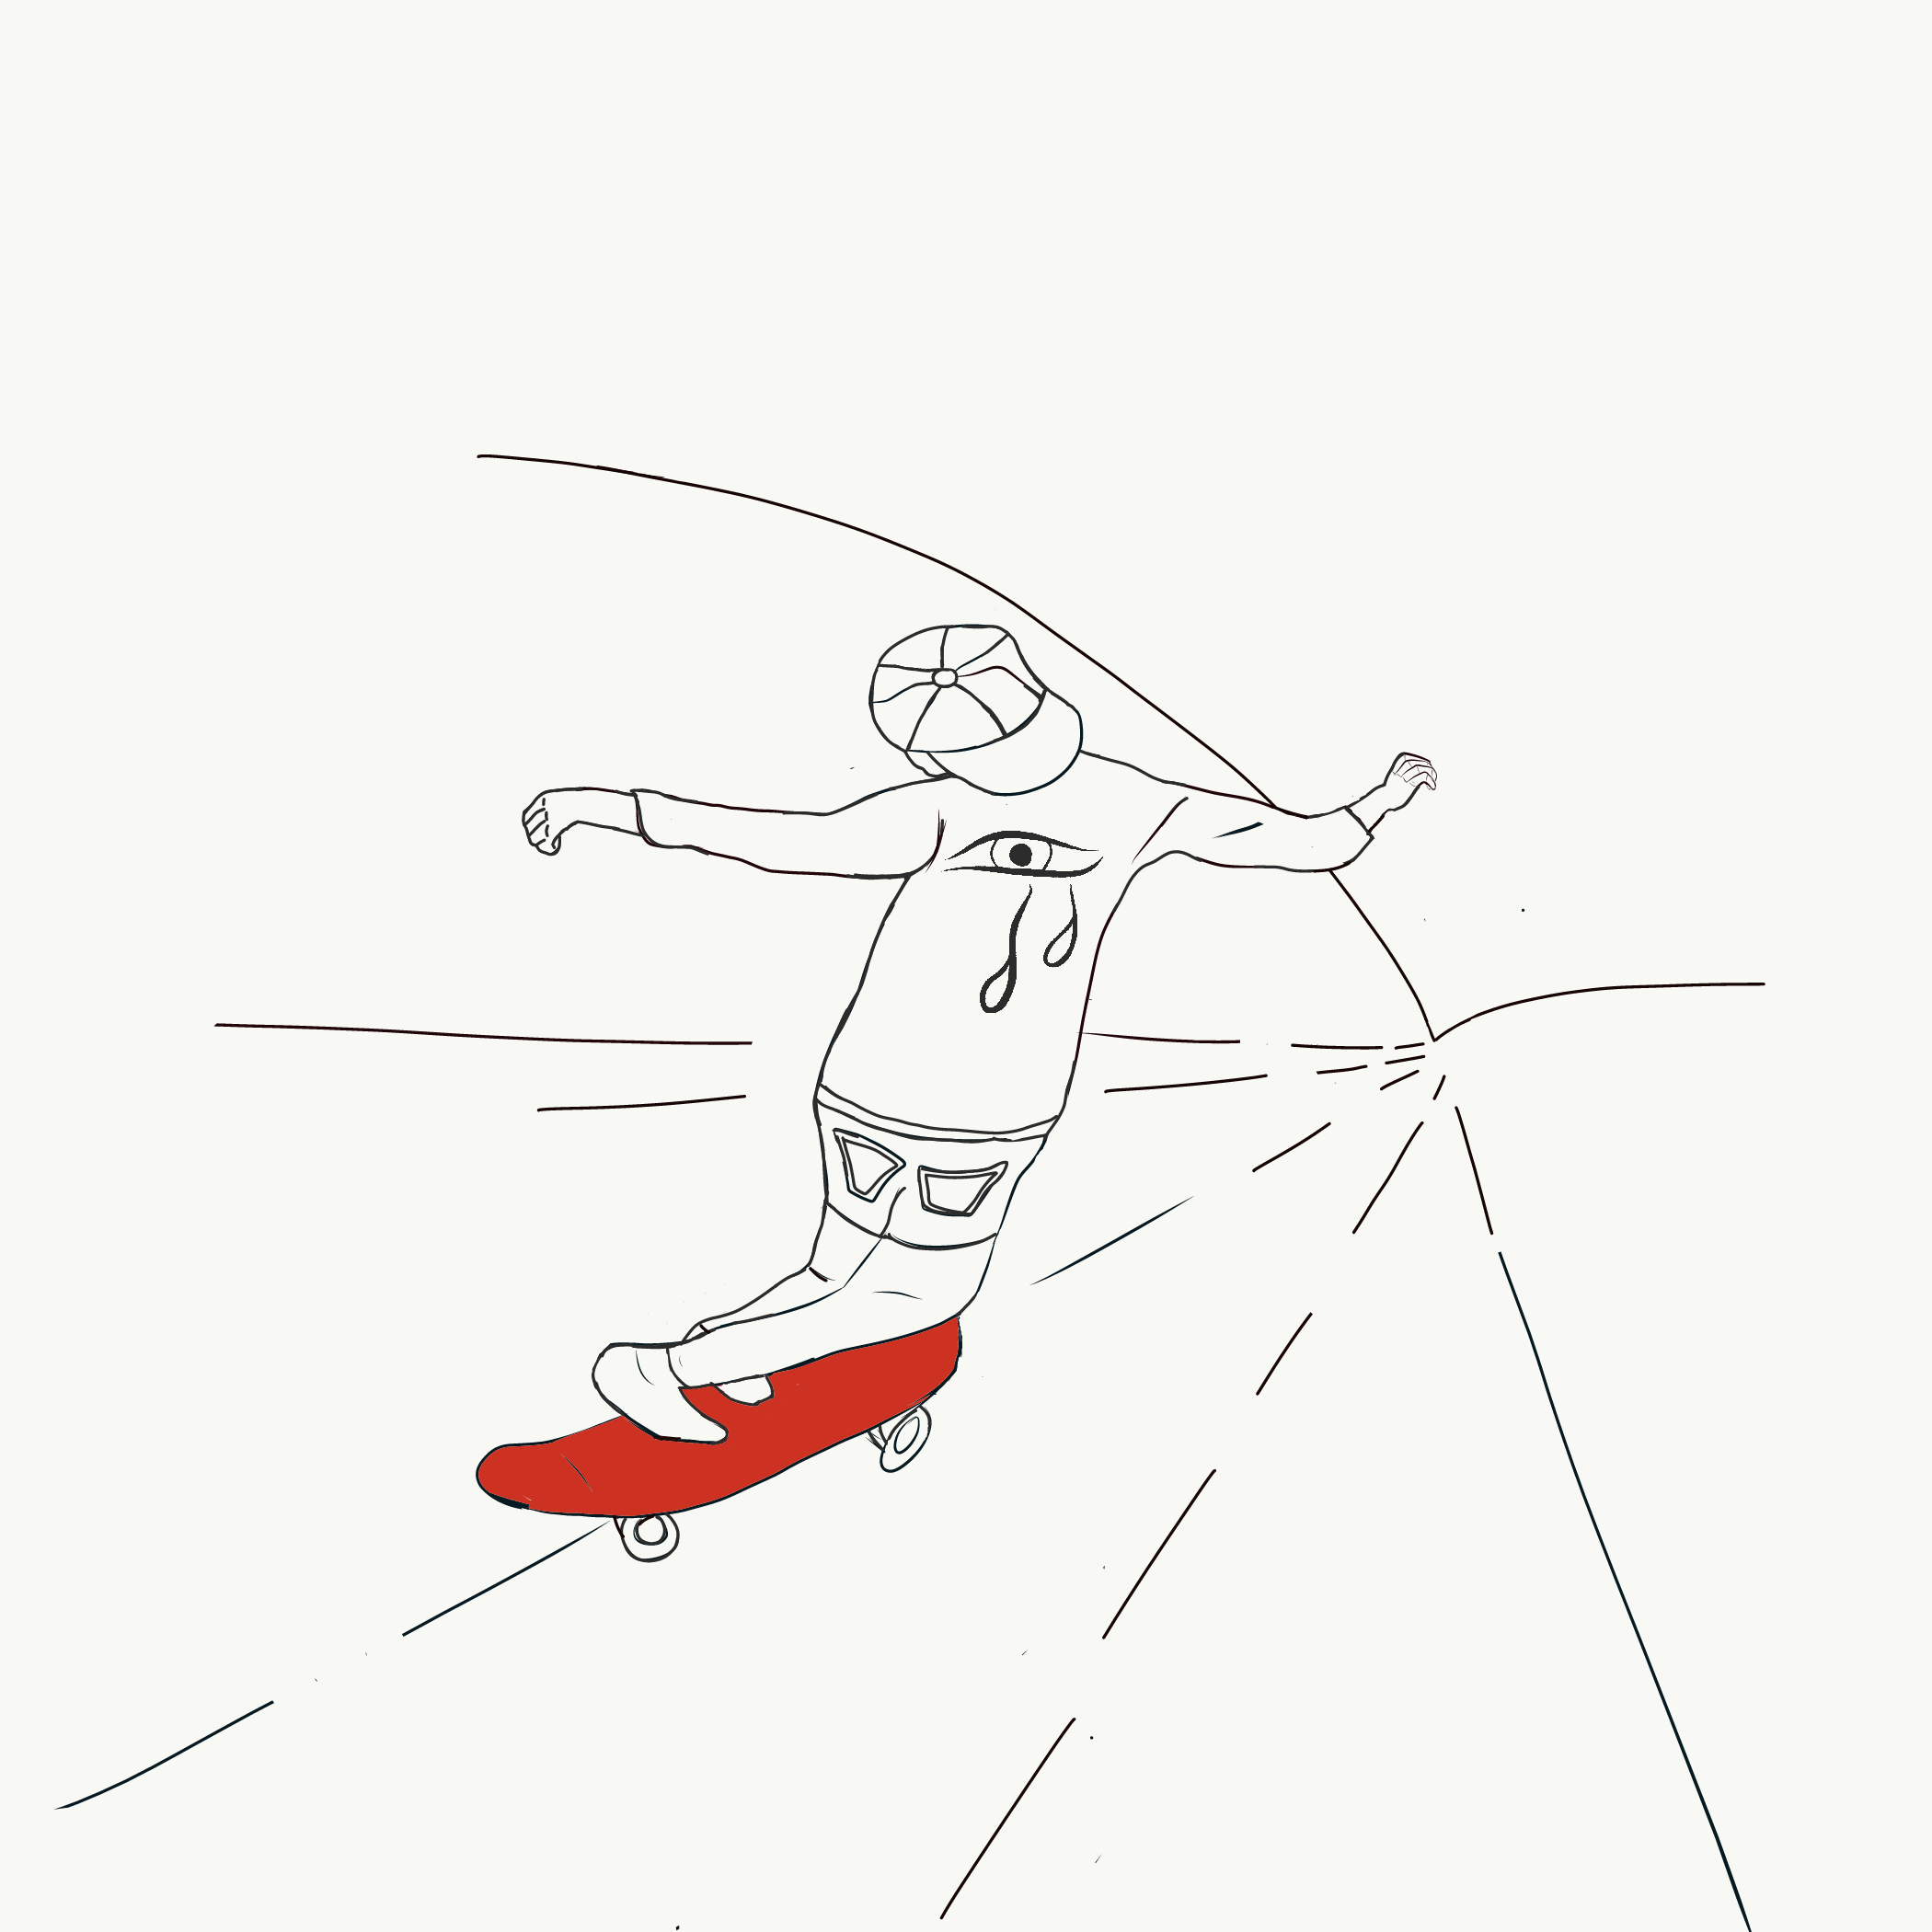 Patinador descalzo y contento (skater)